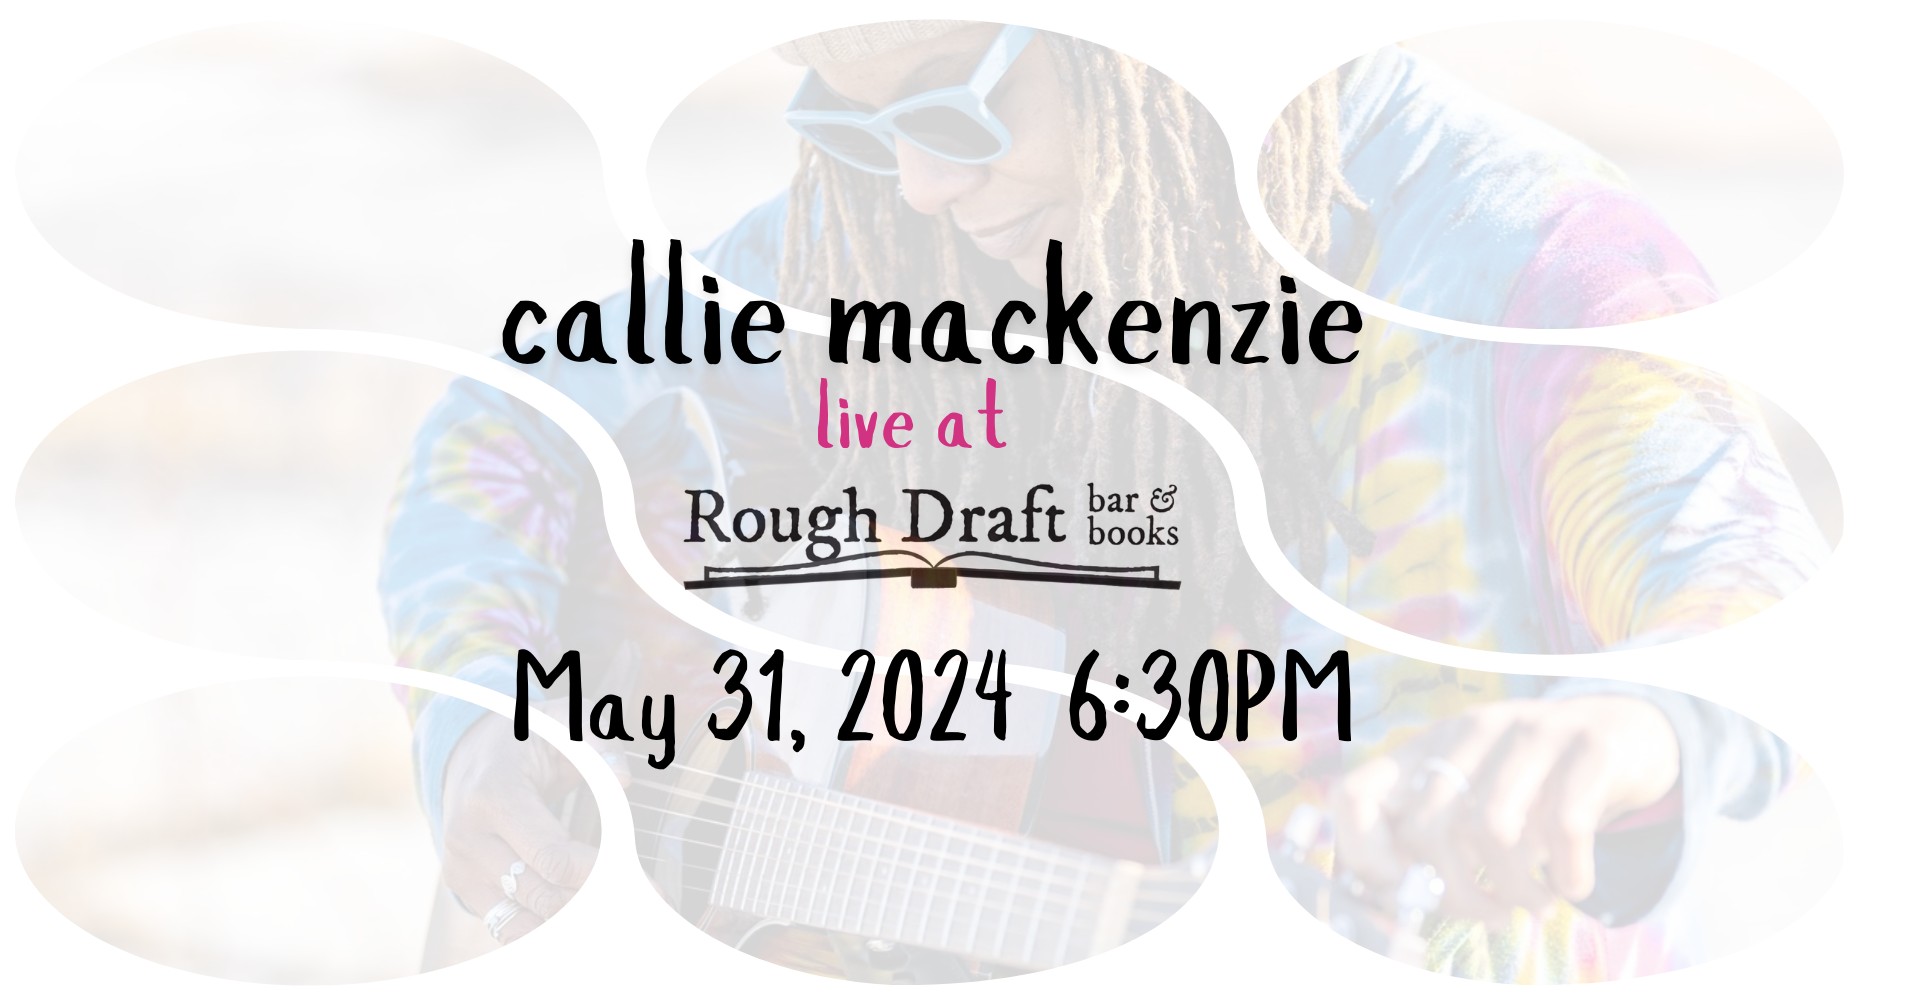 Live music with callie mackenzie @ Rough Draft